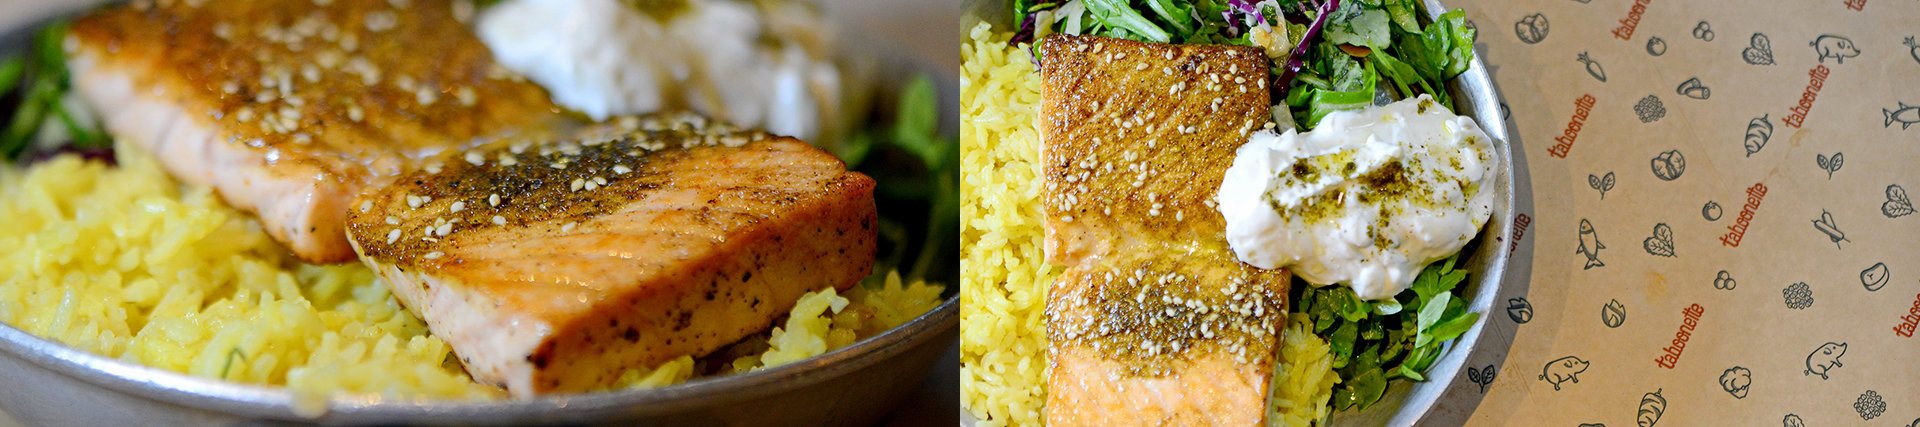 Salmon, rice and salad